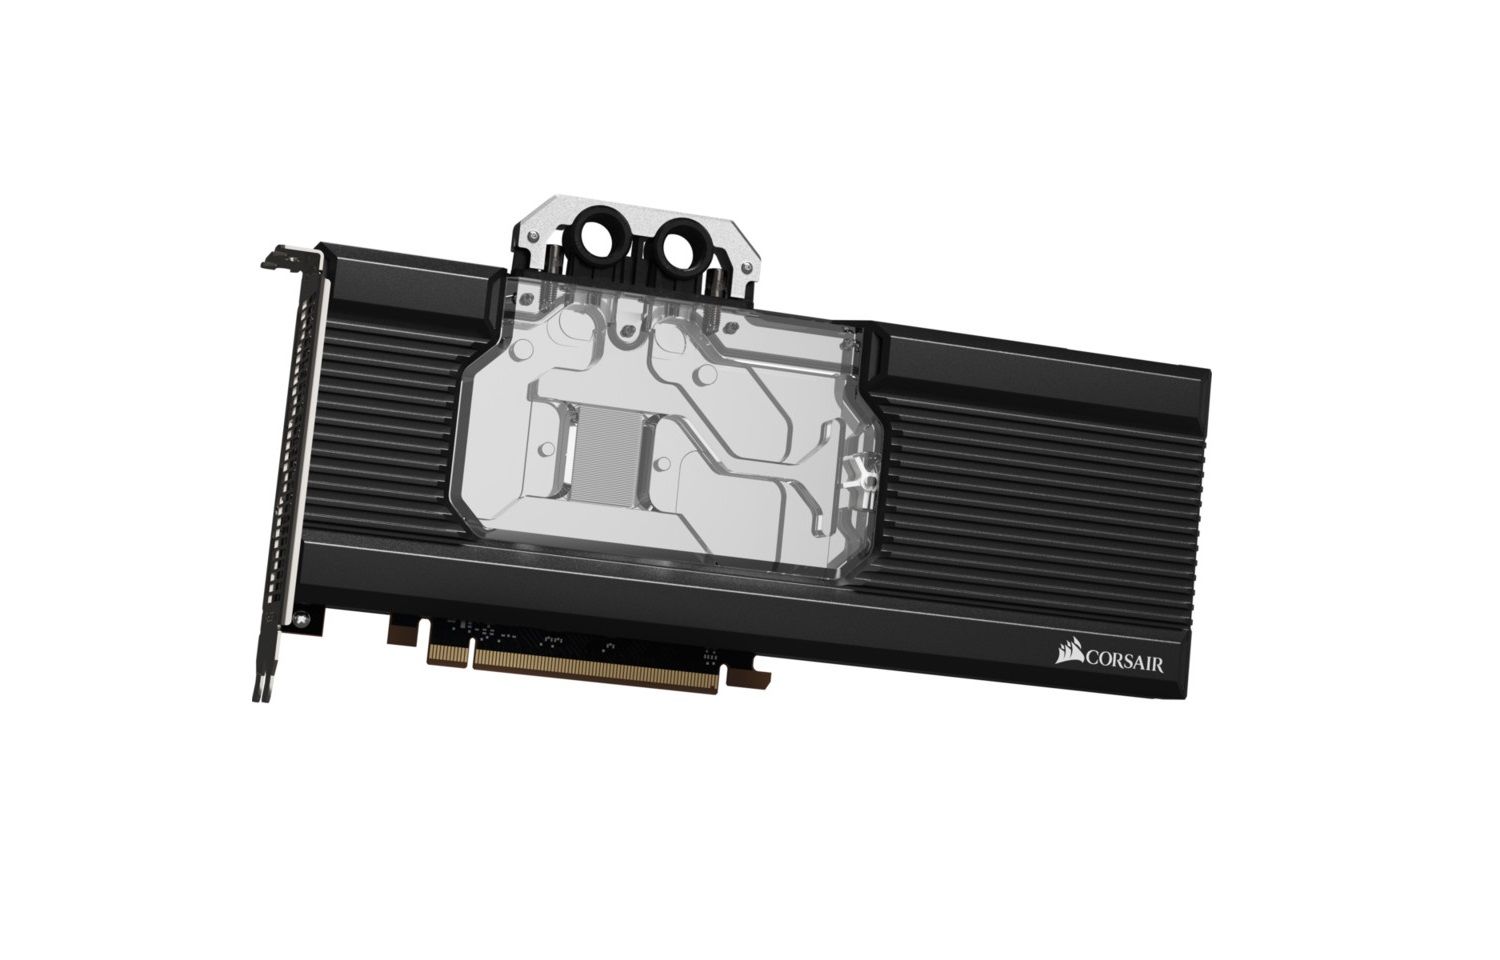 Corsair presents the Hydro X water block for AMD Radeon 5700 XT